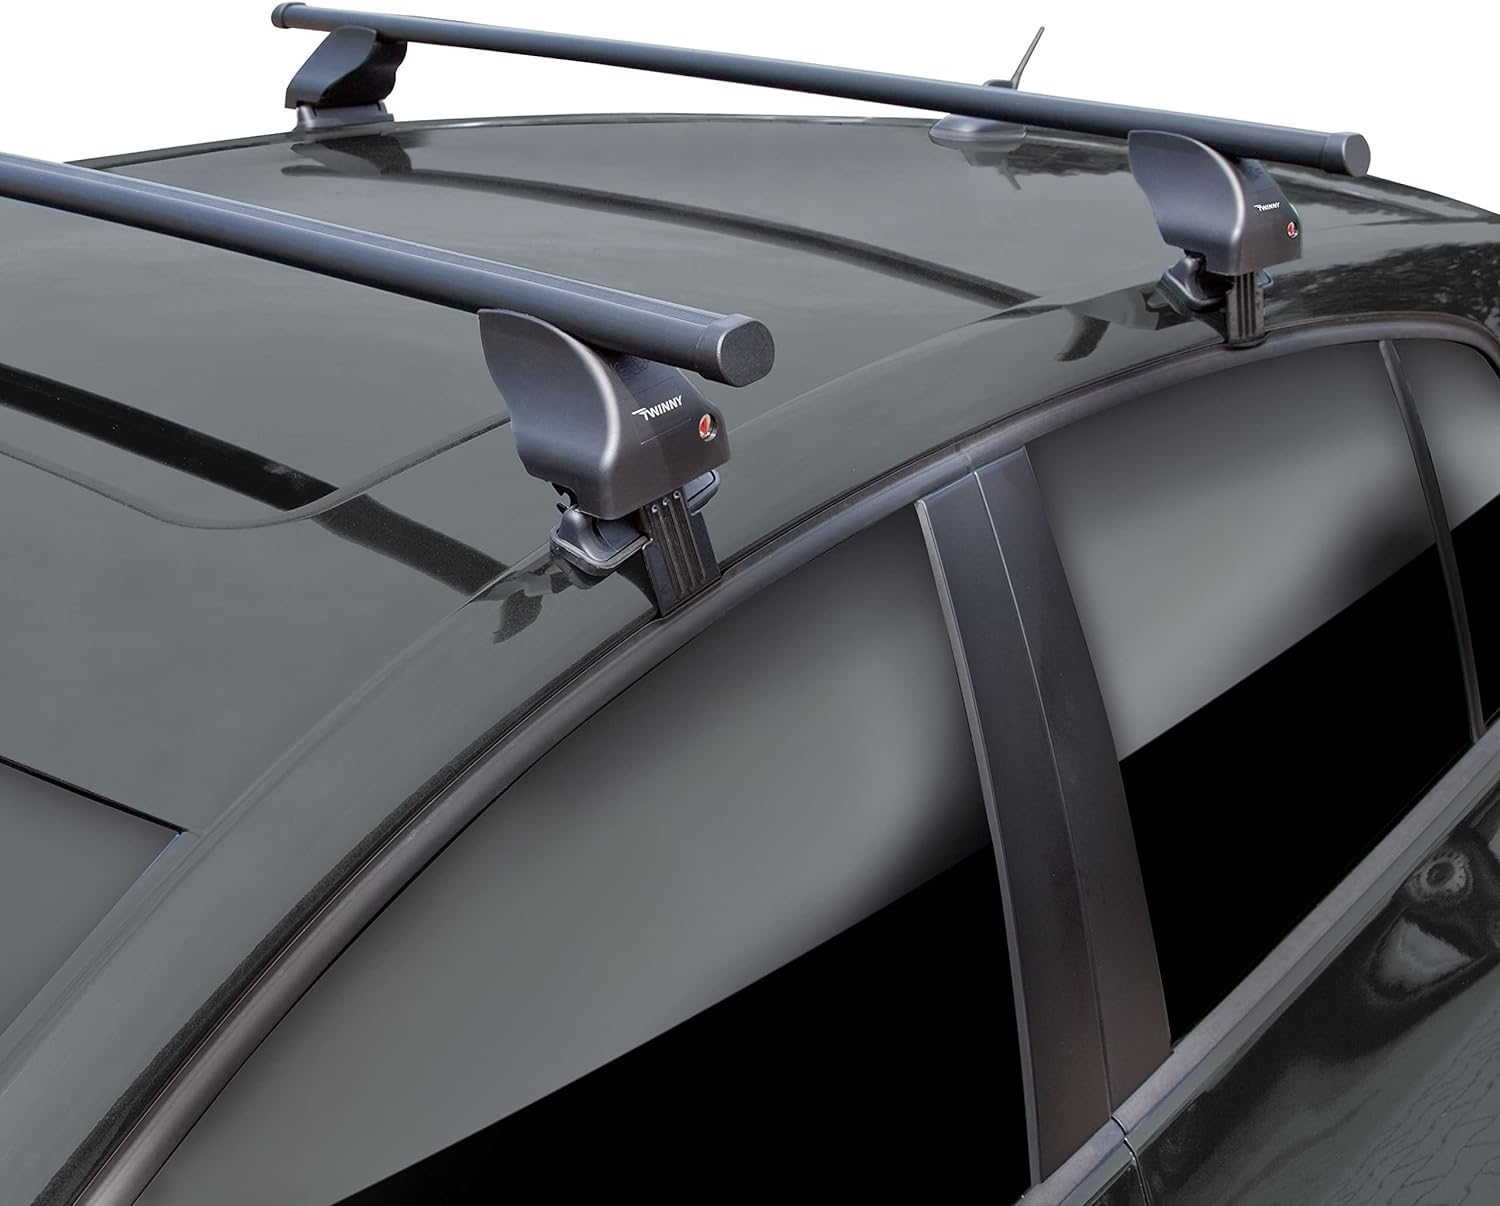 Twinny Load Dachträgersatz Stahl S32 kompatibel mit Opel Zafira B (für Fahrzeuge ohne Dachreling)